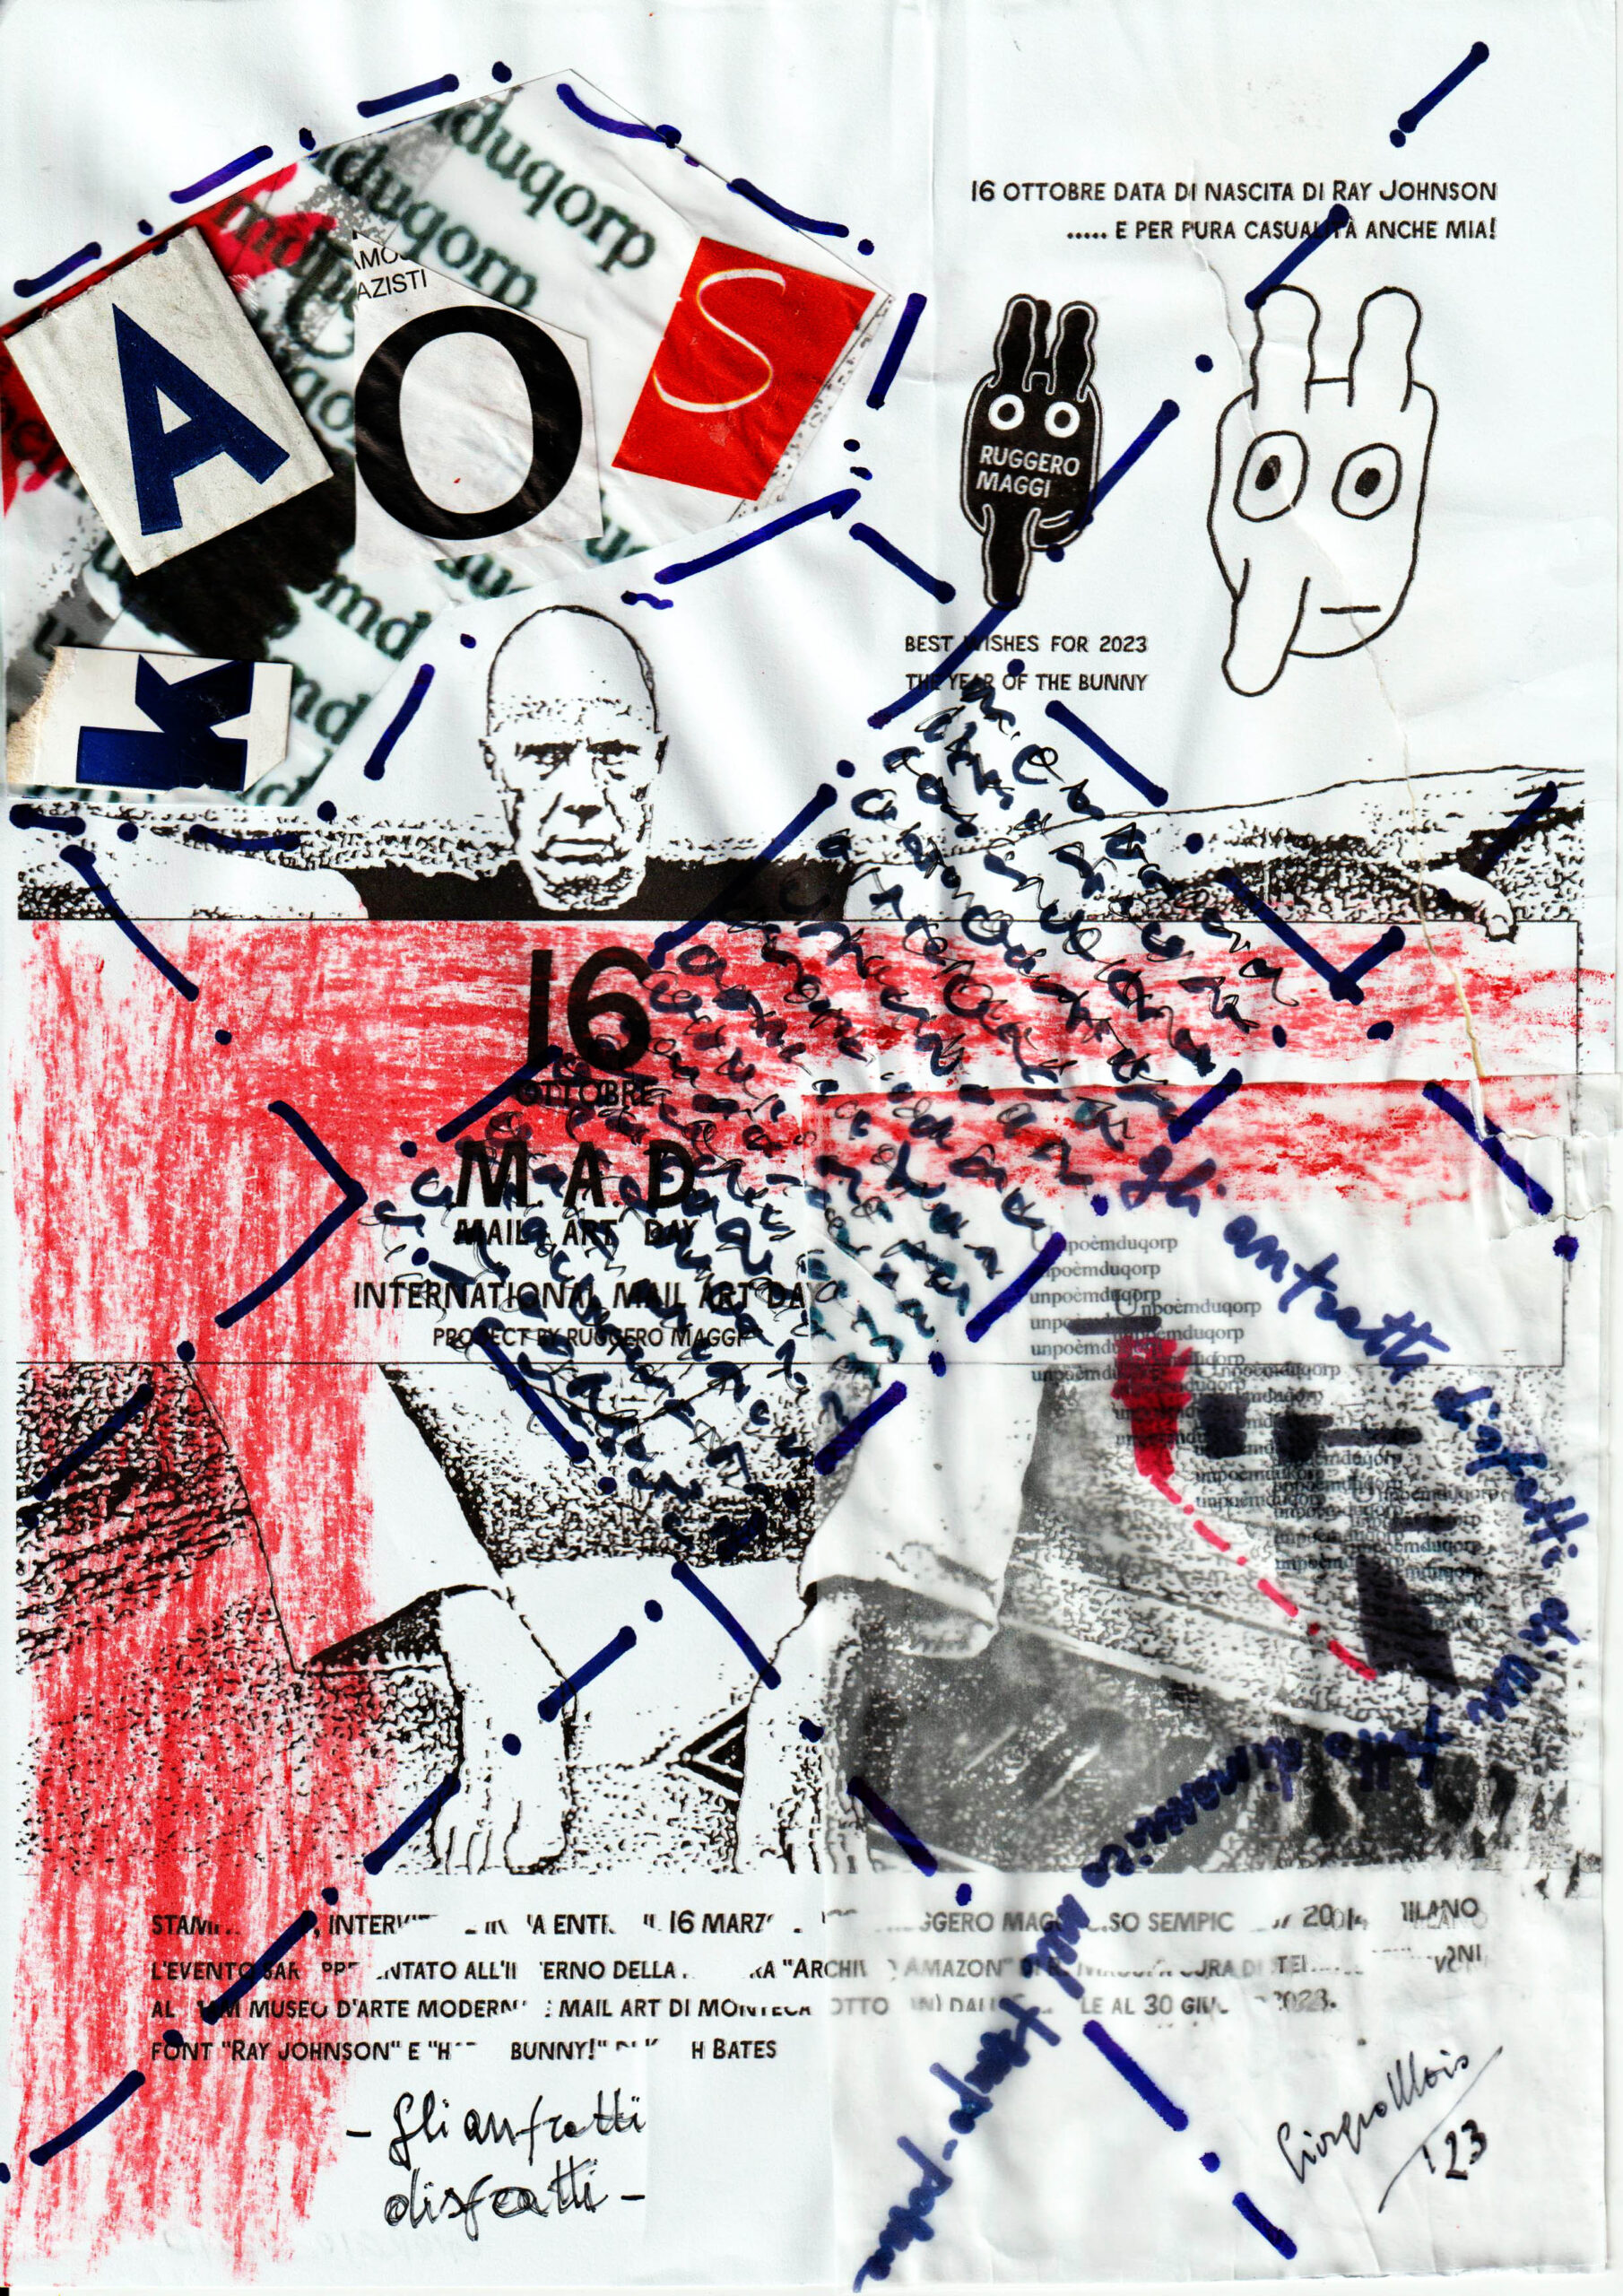 M.A.D. - Mail Art Day: Giorgio Moio, Italy